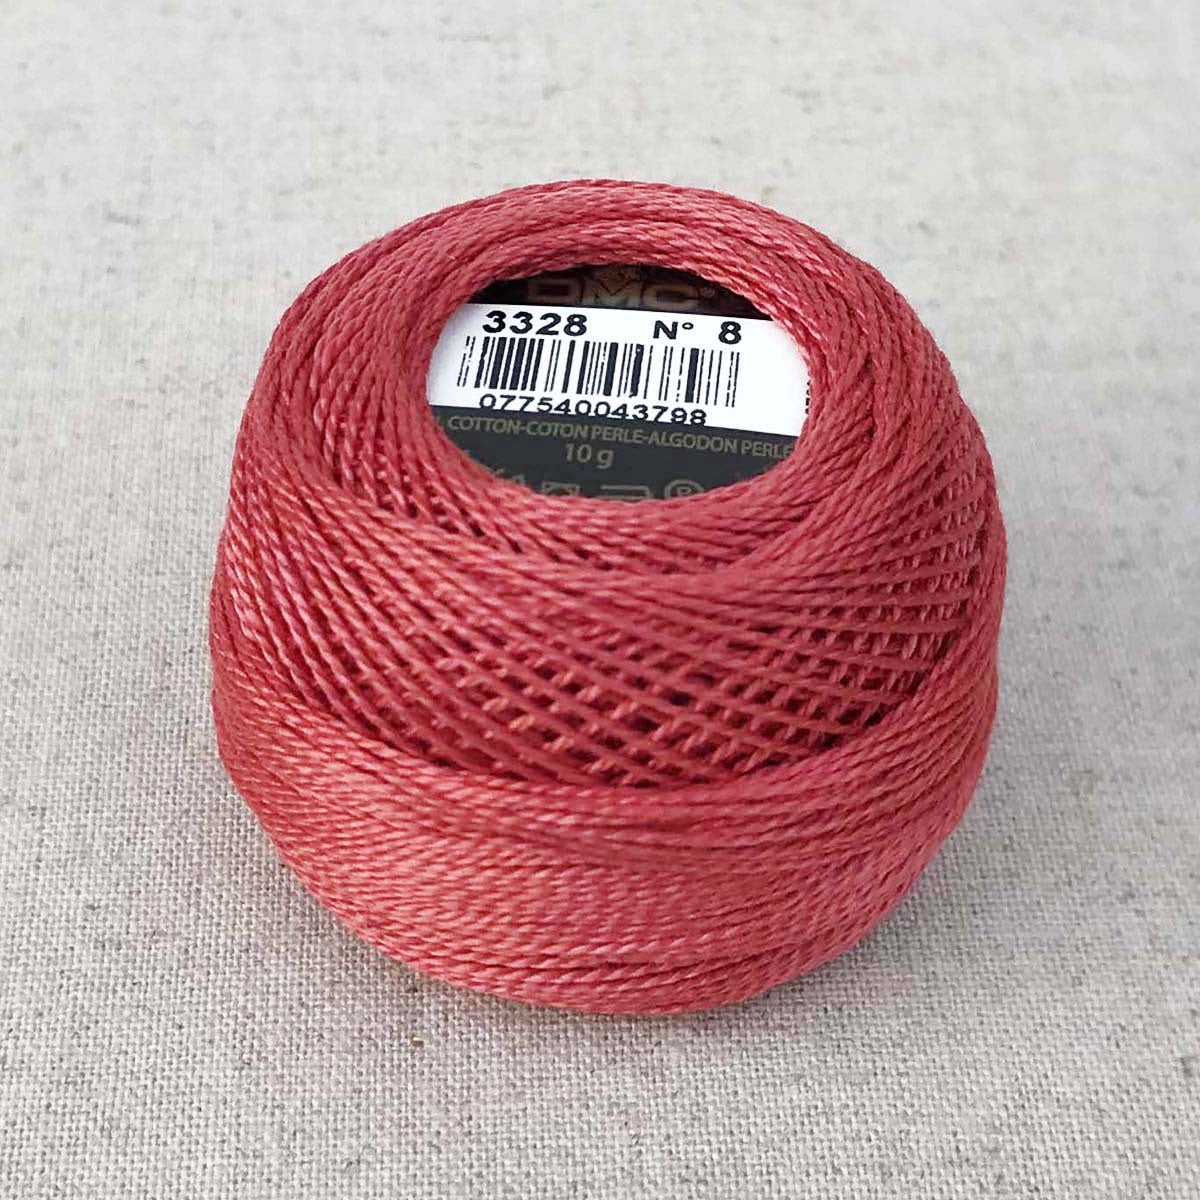 DMC Pearl Cotton - Size 8 - 3328